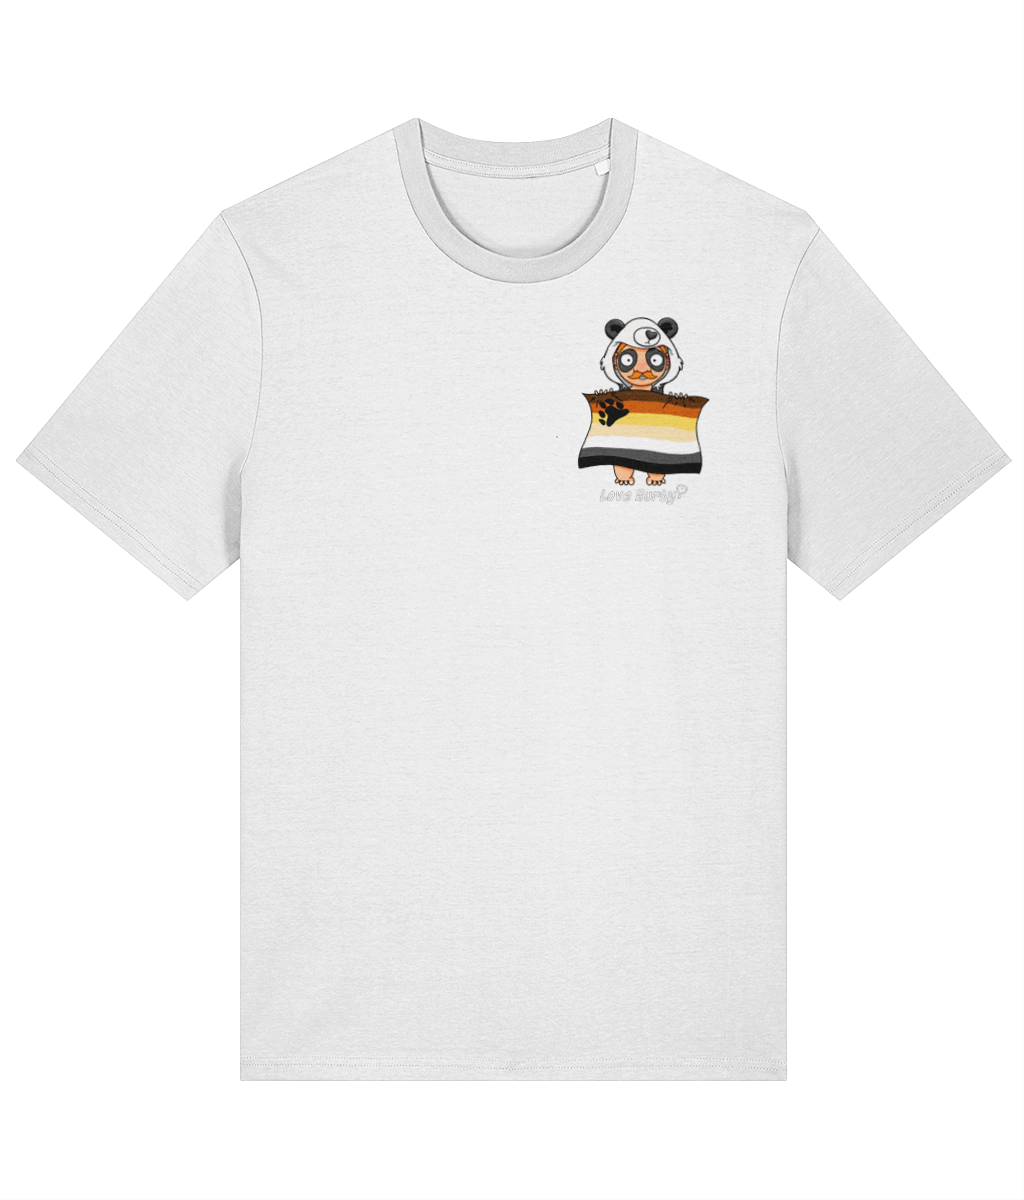 Panda Bear Onesie T-Shirt